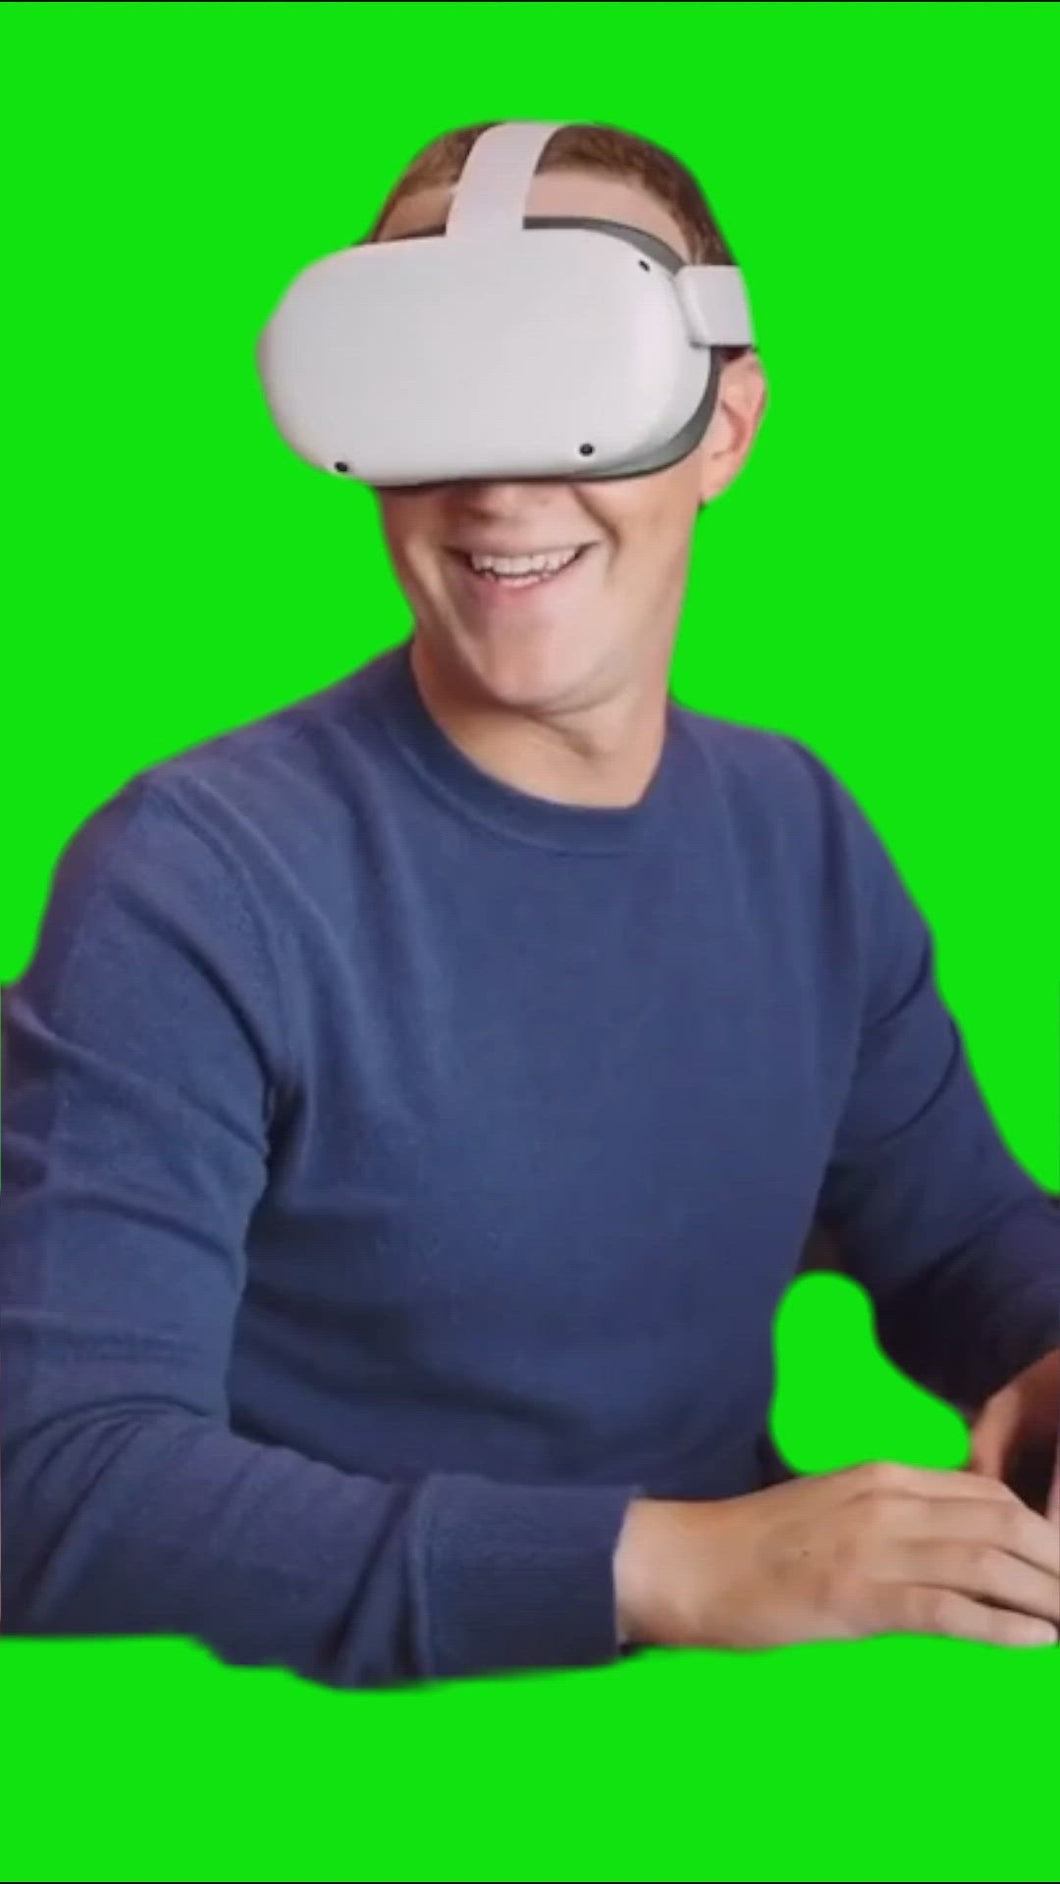 Marc Zuckerberg Favorite VR Feature meme (Green Screen)